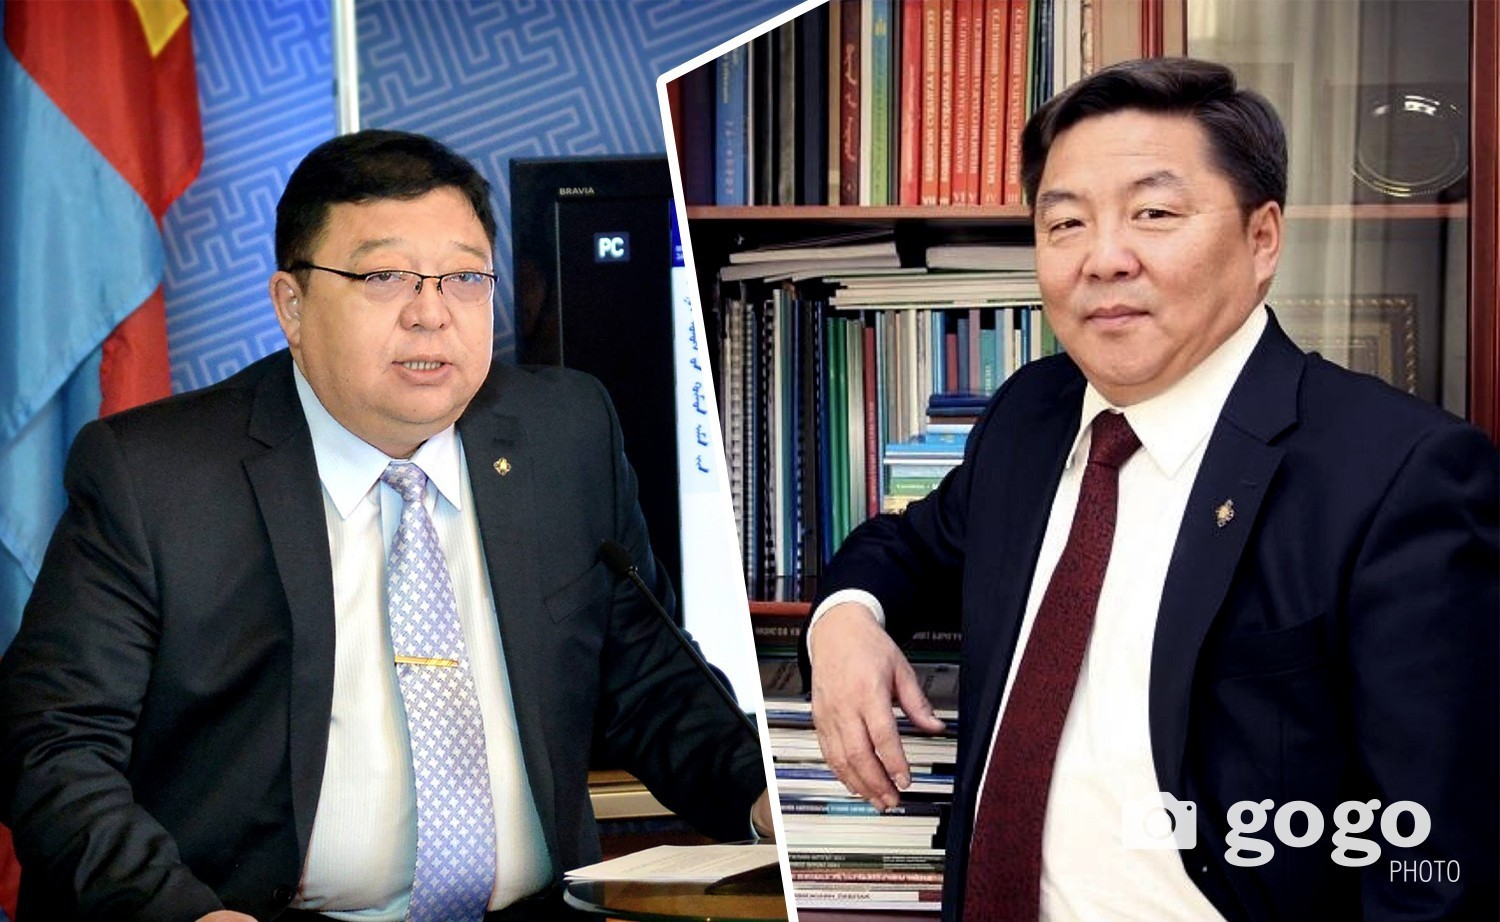 S.Erdene /Left - DP caucuses leader/ ; D.Khayankhyarvaa /Right - MPP caucuses leader/